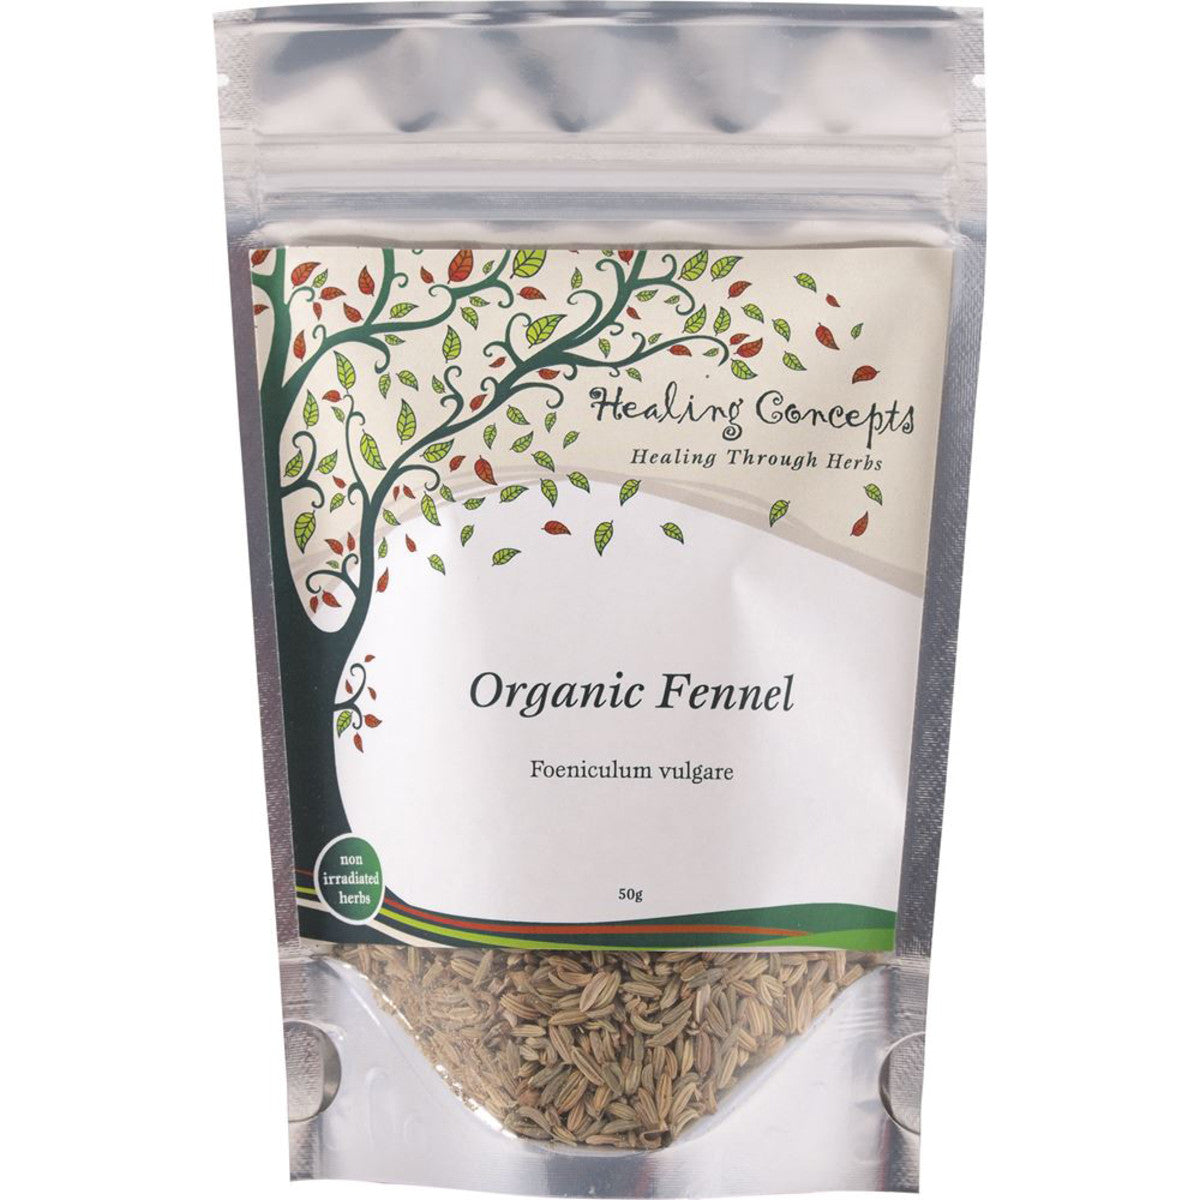 Healing Concepts Fennel Tea 50g, Organic